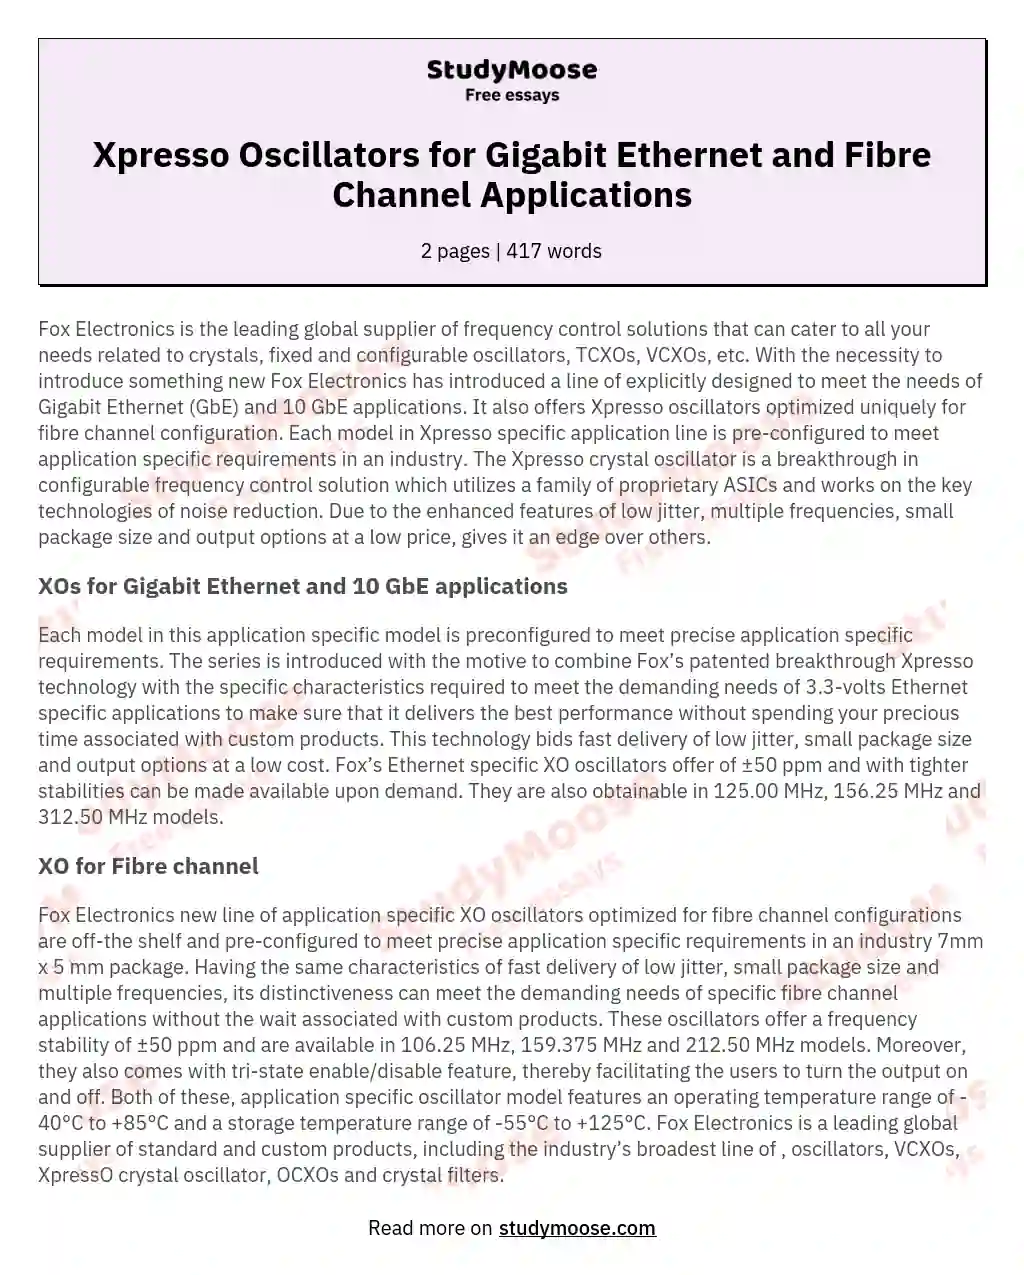 Xpresso Oscillators for Gigabit Ethernet and Fibre Channel Applications essay